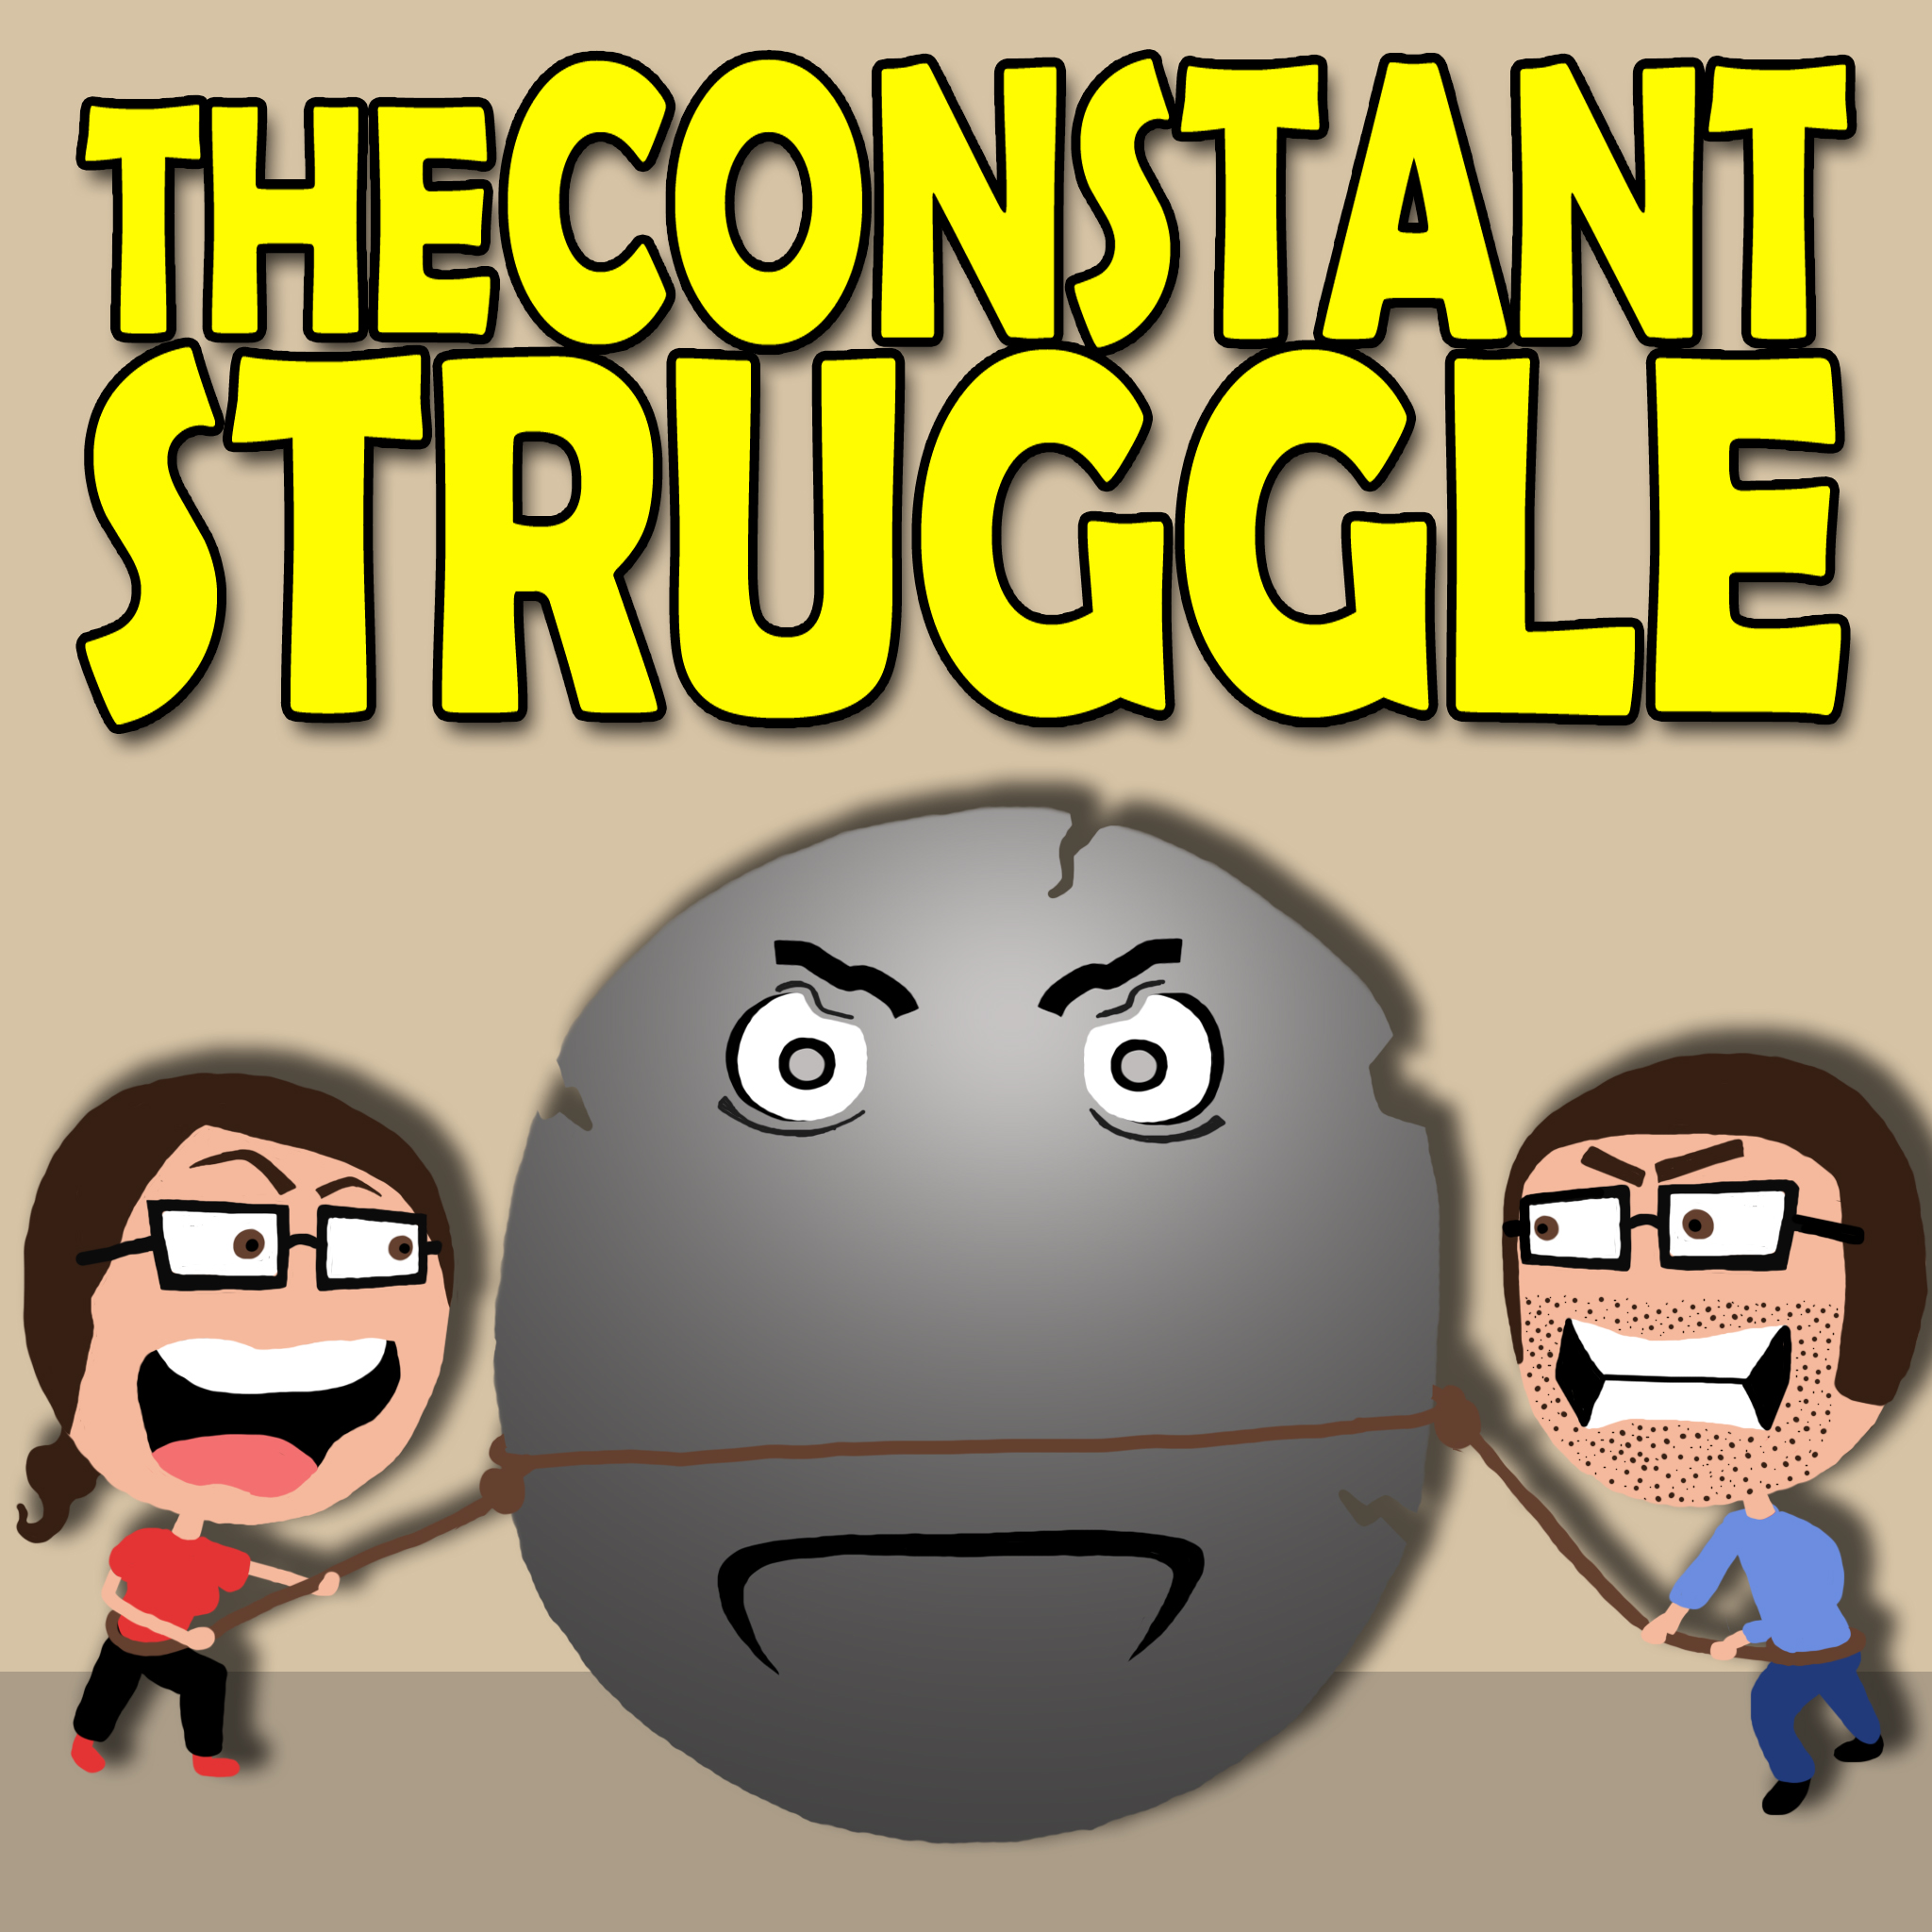 the constant struggle - chibbi (1)